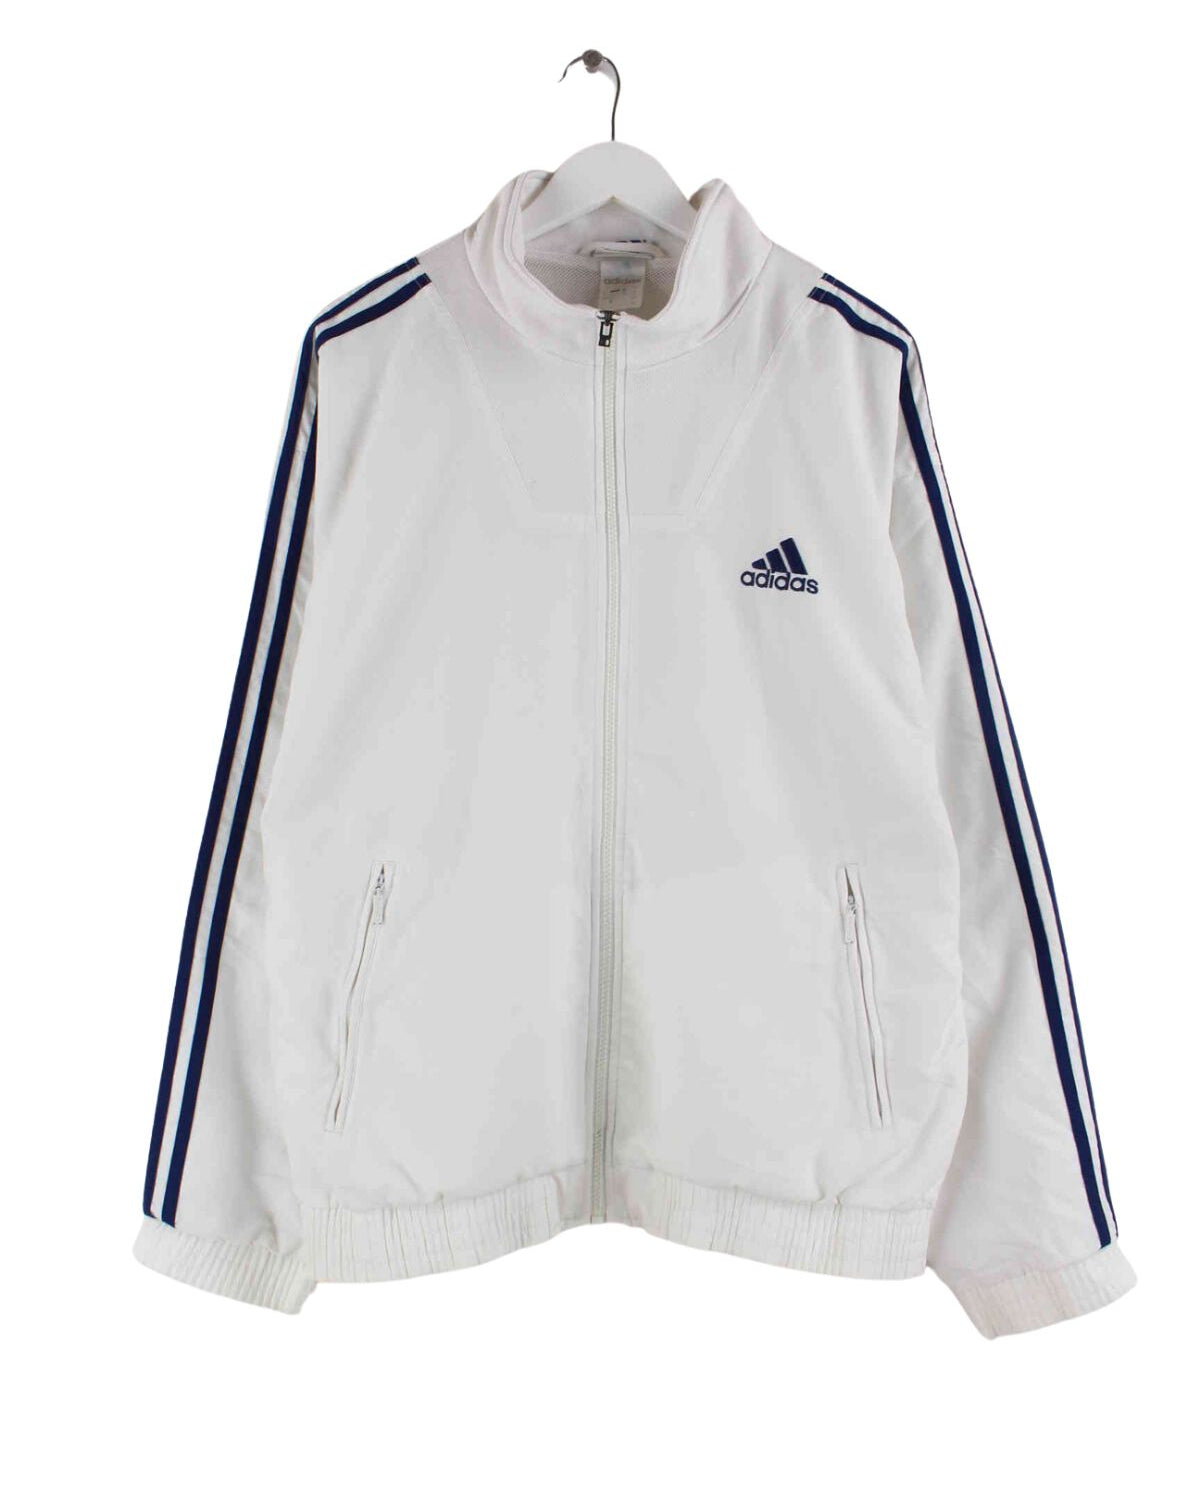 Adidas 90s Vintage 3-Stripes Trainingsjacke Weiß L (front image)